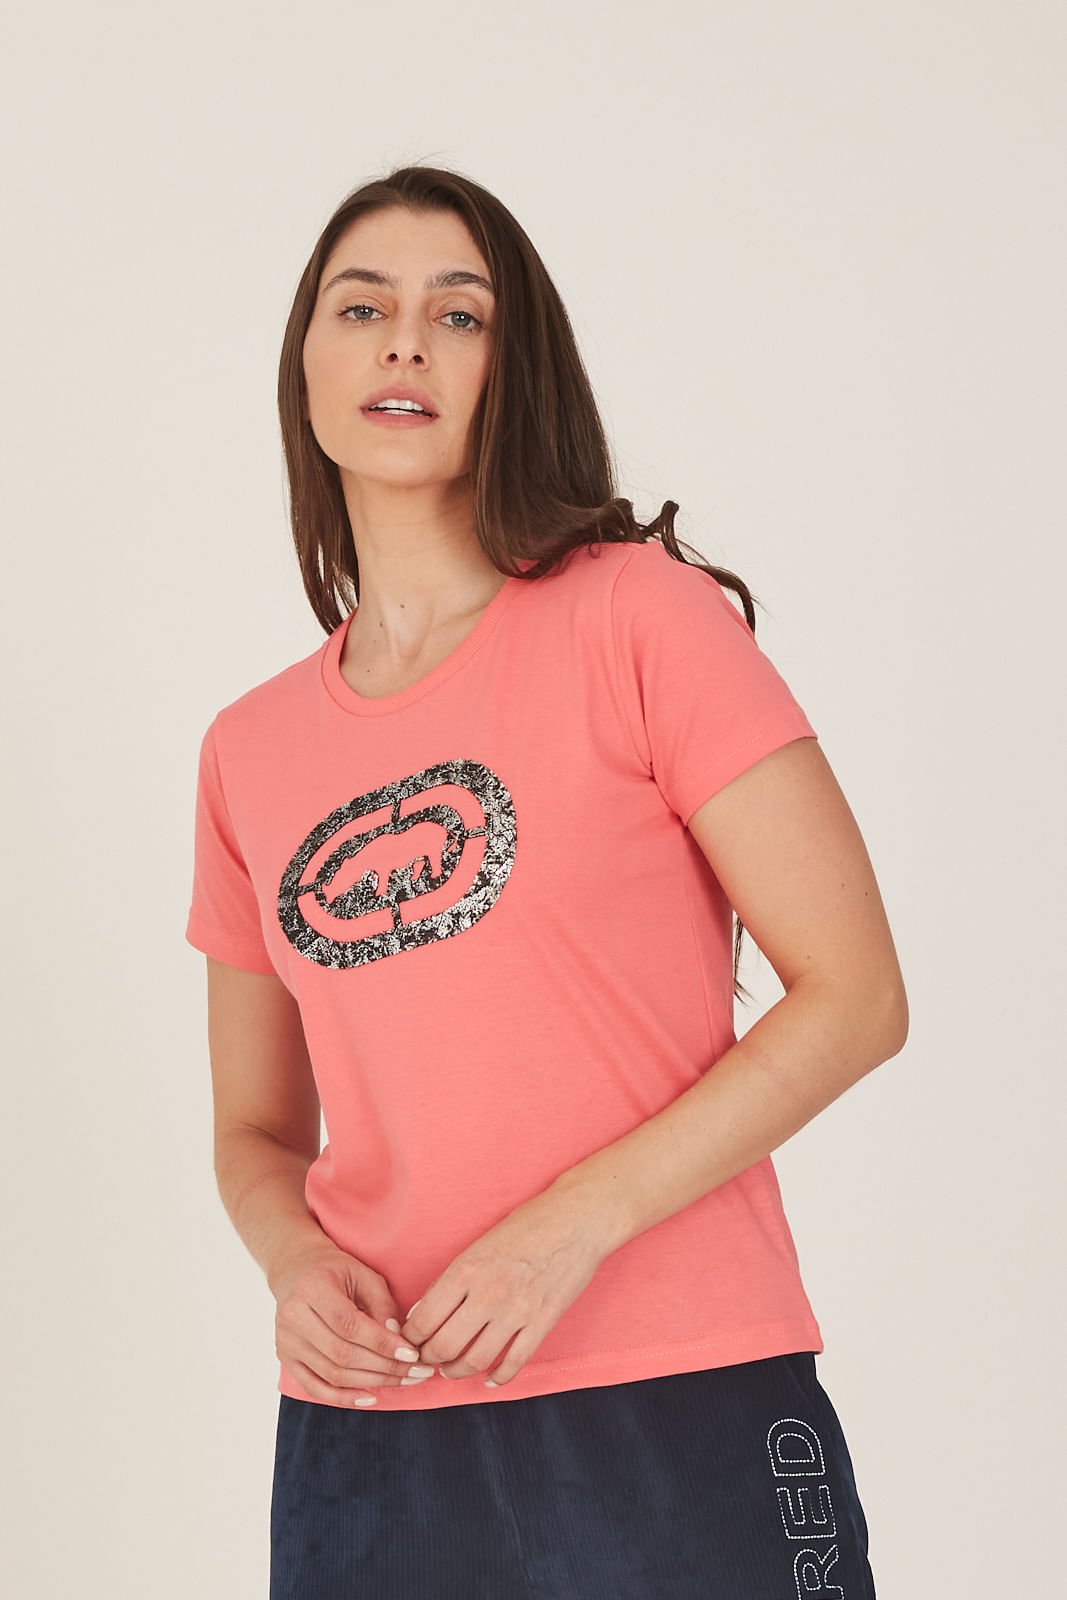 Camiseta Ecko Feminina Estampada Rosa